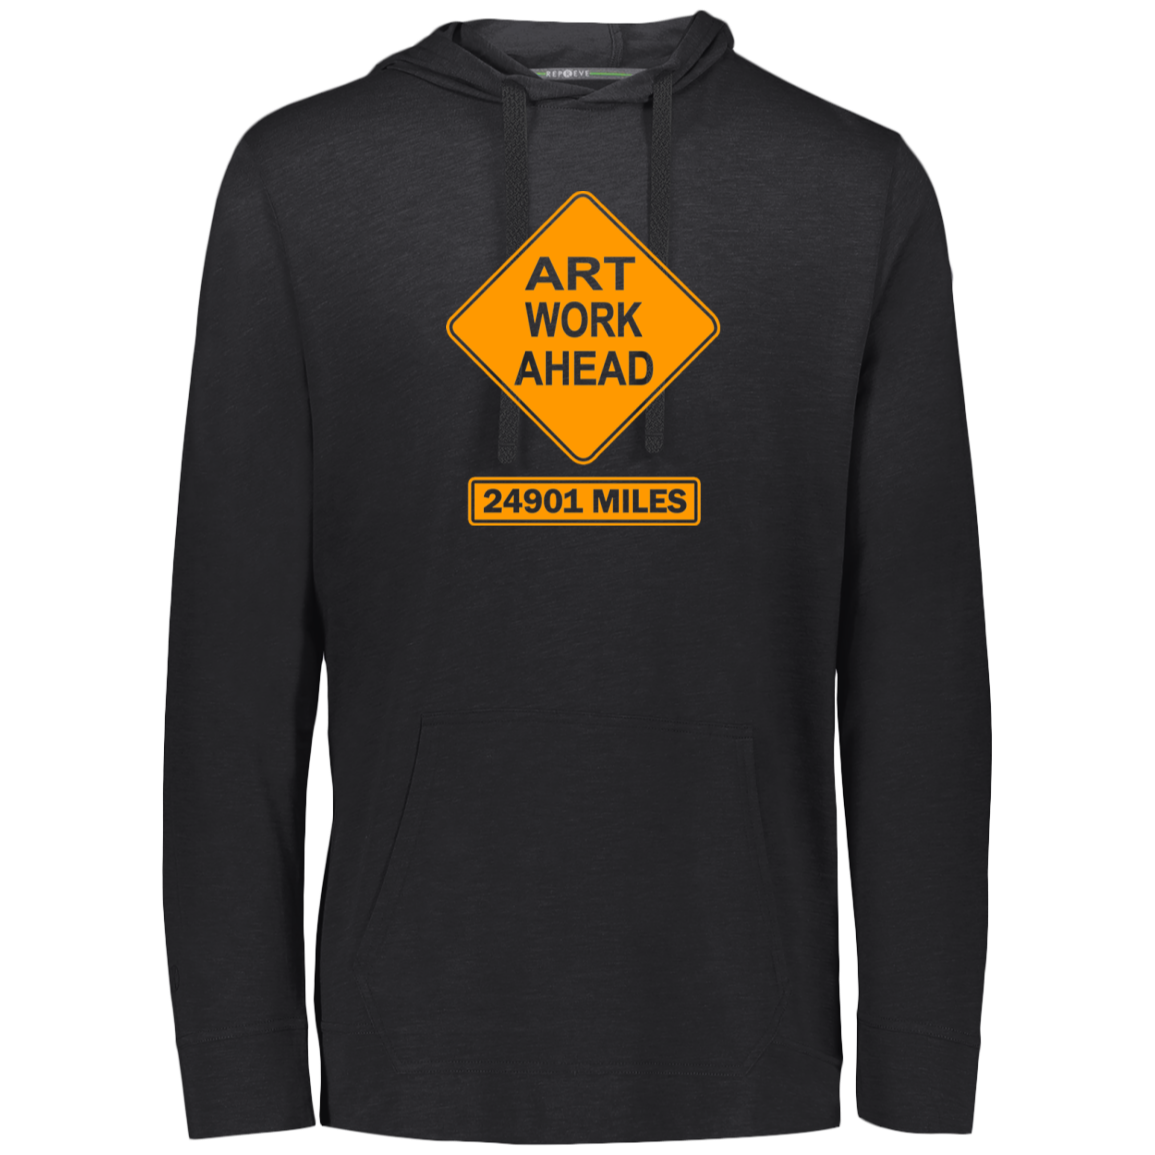 ArtichokeUSA Custom Design. Art Work Ahead. 24,901 Miles (Miles Around the Earth). Eco Triblend T-Shirt Hoodie